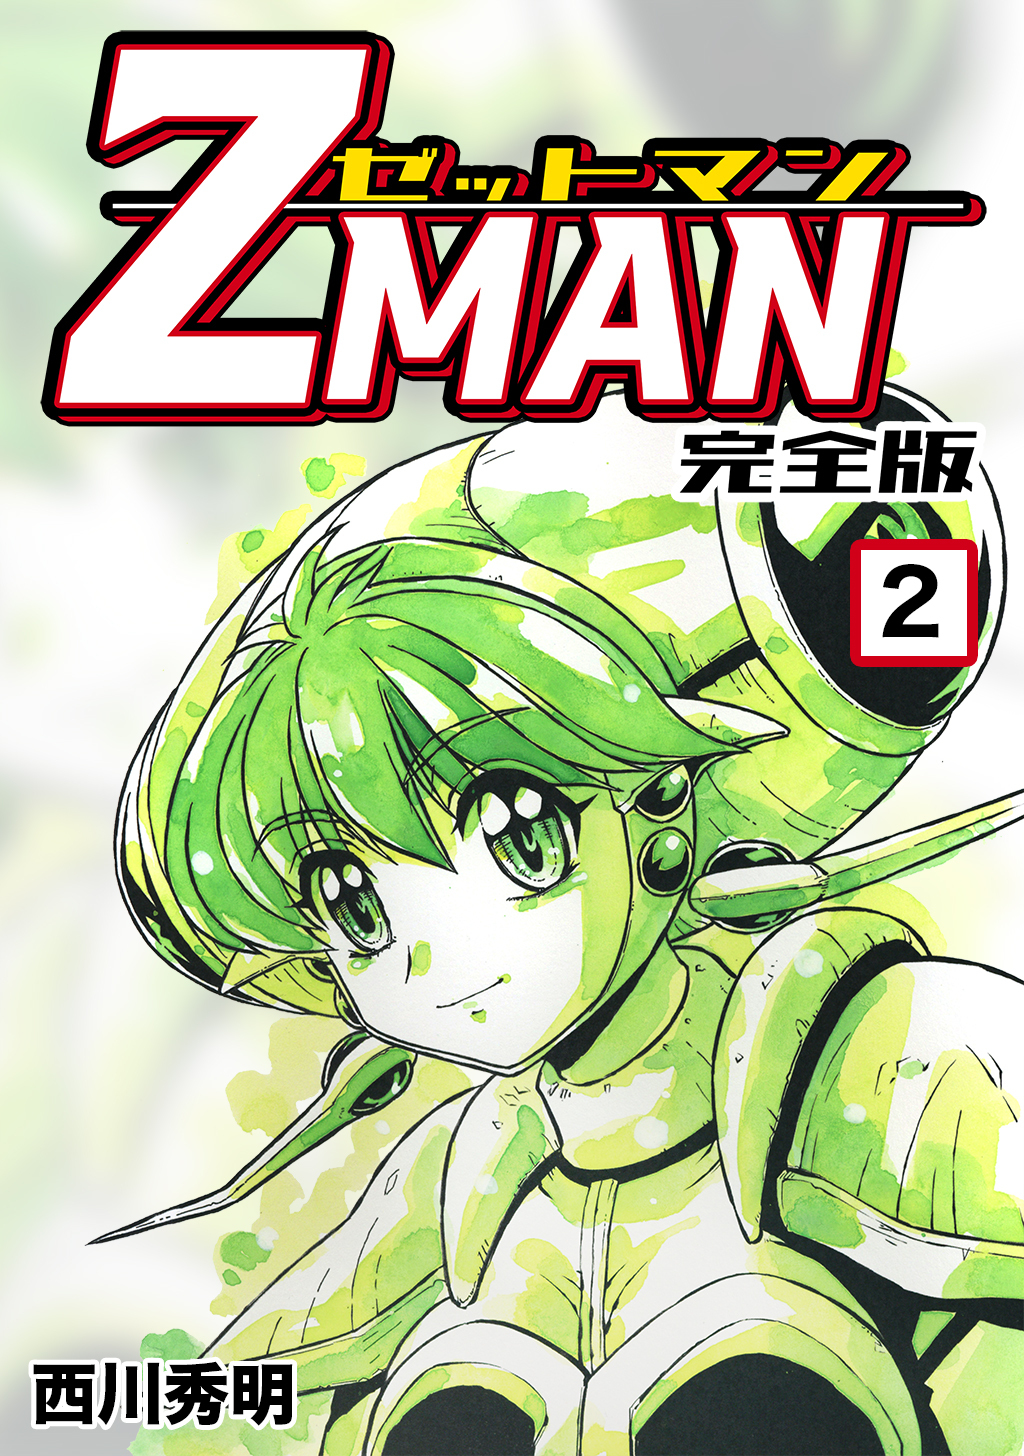 Z Man ゼットマン 完全版 2 無料 試し読みなら Amebaマンガ 旧 読書のお時間です